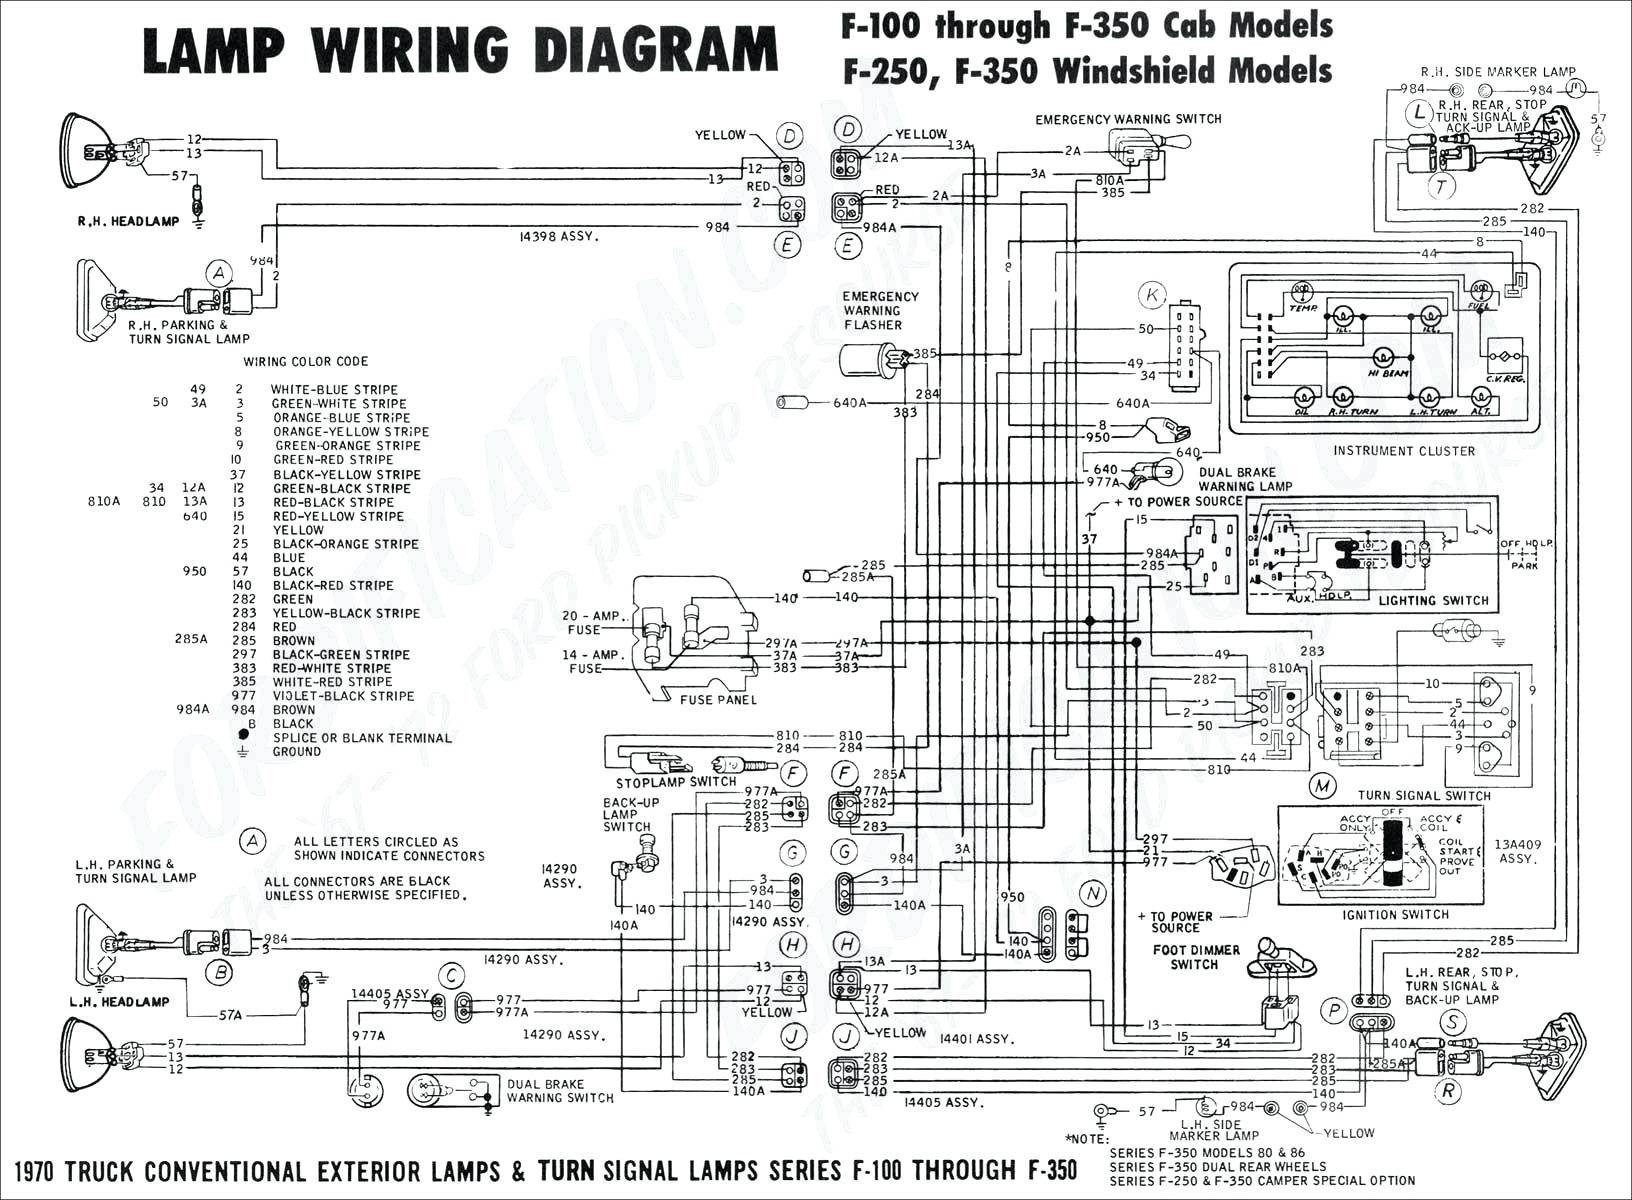 Honda Civic Engine Mount Diagram Wiring Diagram Besides Honda Accord Cooling System Diagram Likewise Of Honda Civic Engine Mount Diagram